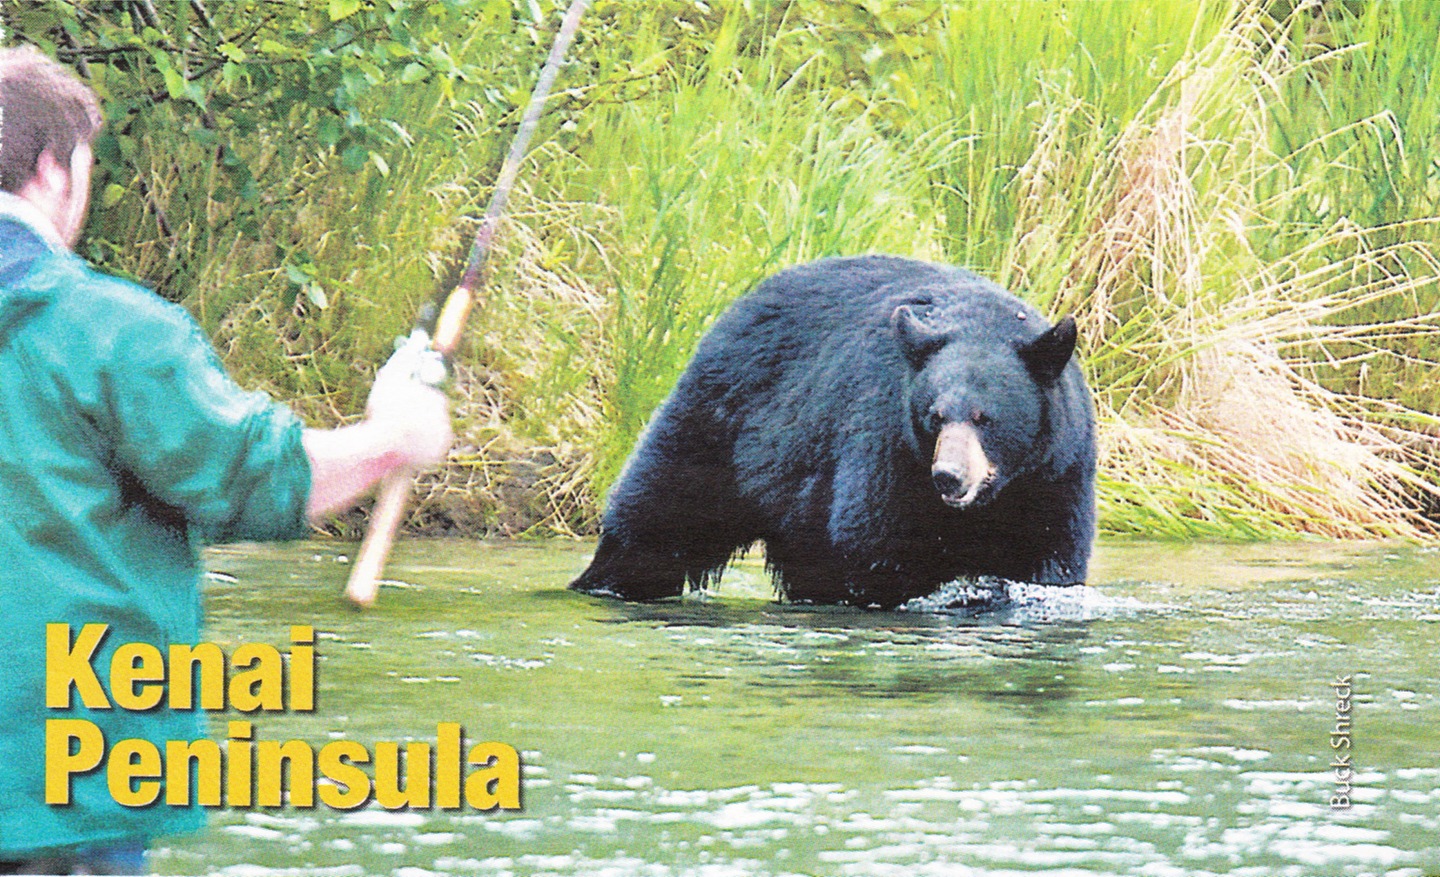 Fishing in Alaska with a black bear.